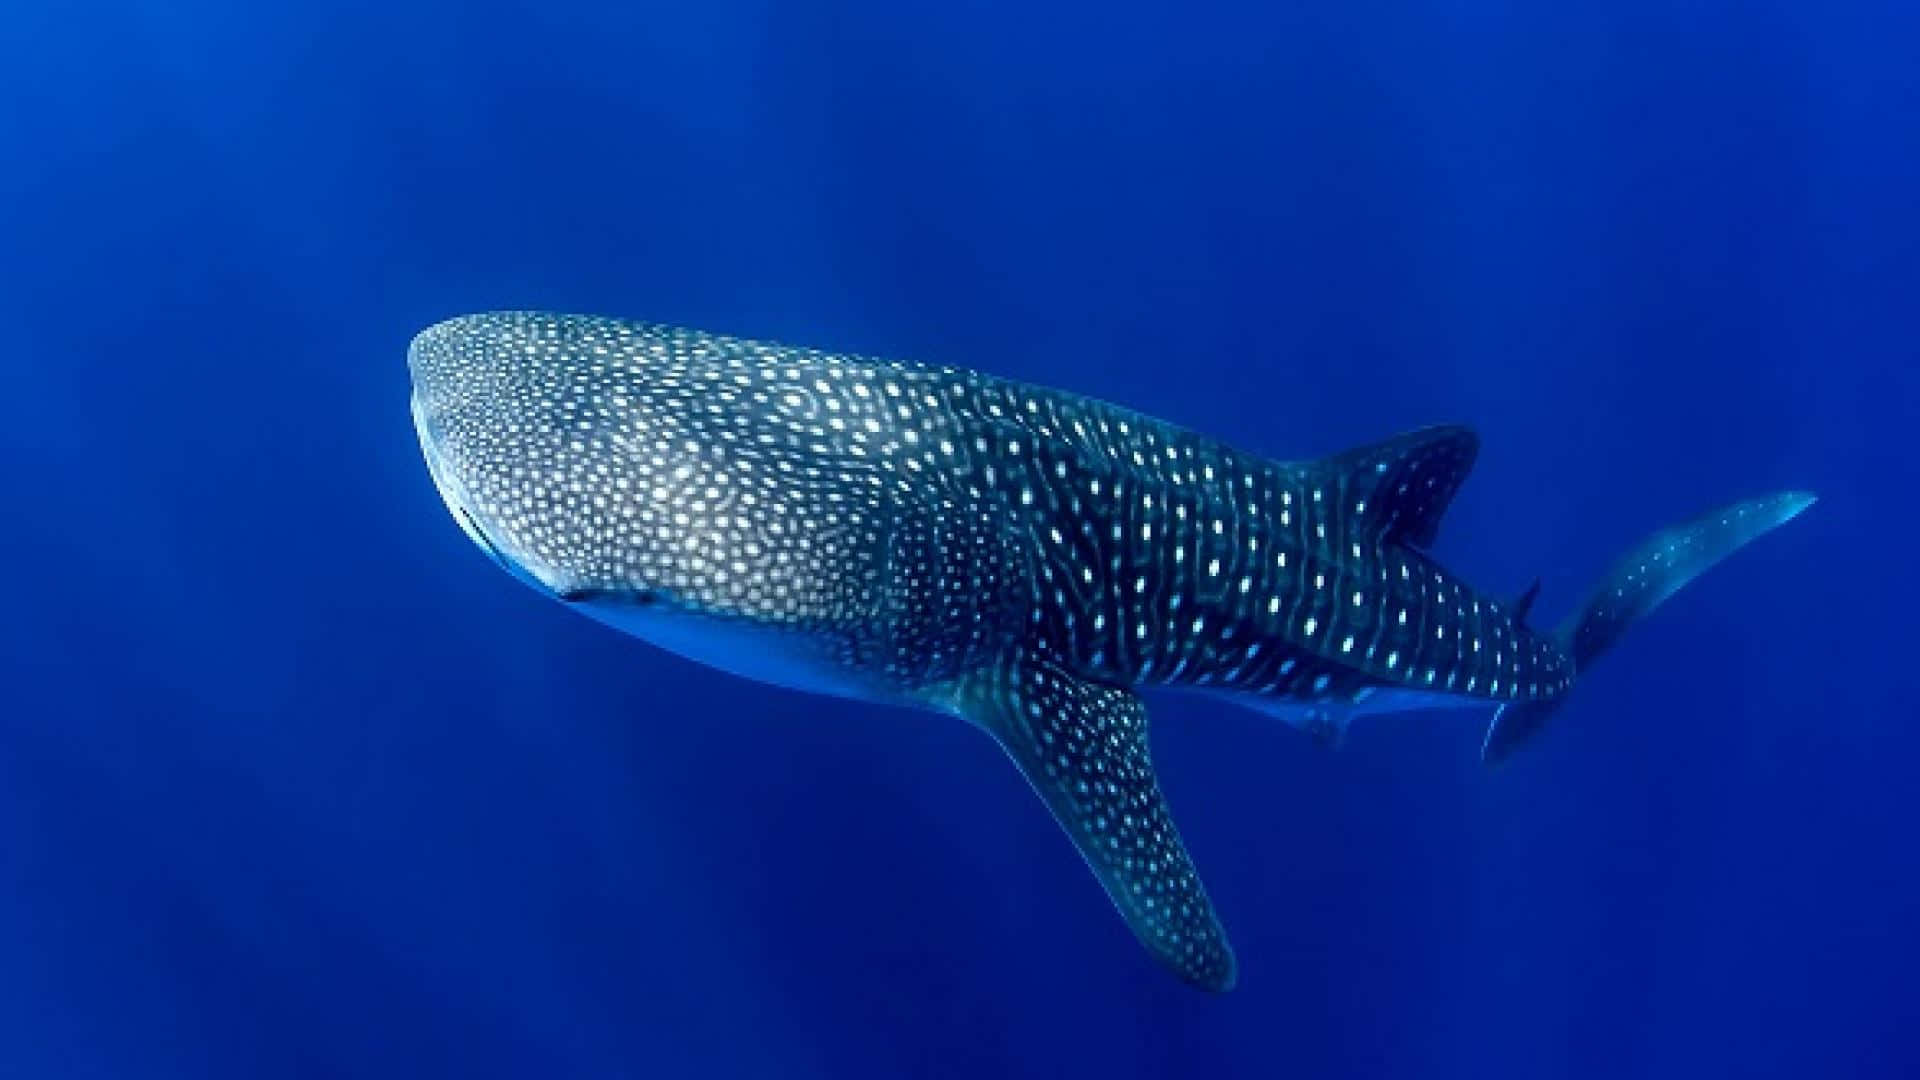 Caption: Majestic Diving Companion - The Graceful Whale Shark Wallpaper